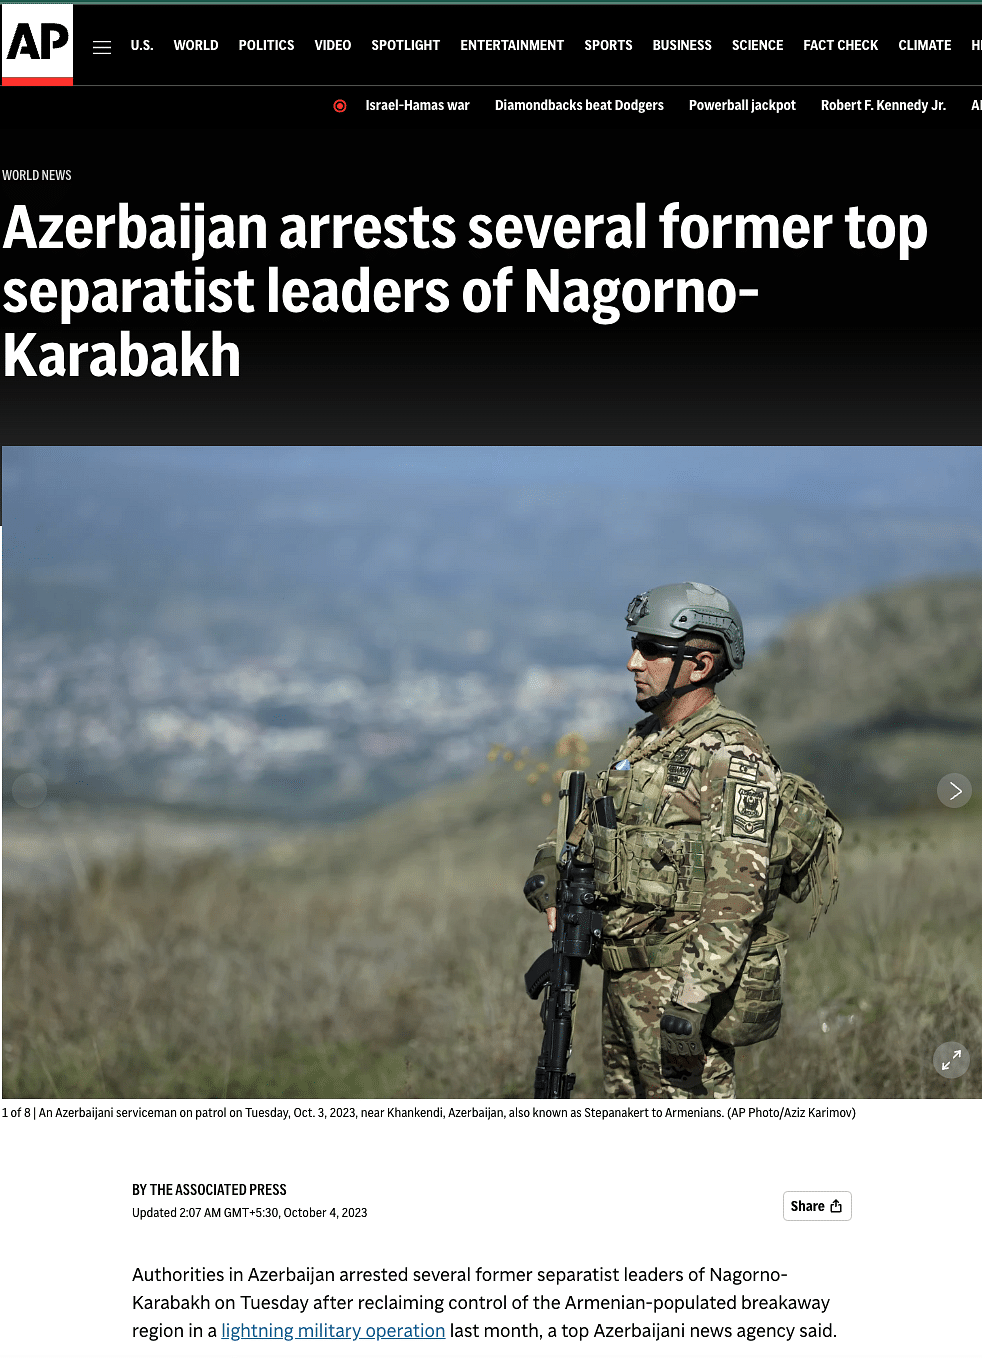 This video shows Azerbaijan's intelligence agency, DTX arresting separatist group leaders. 